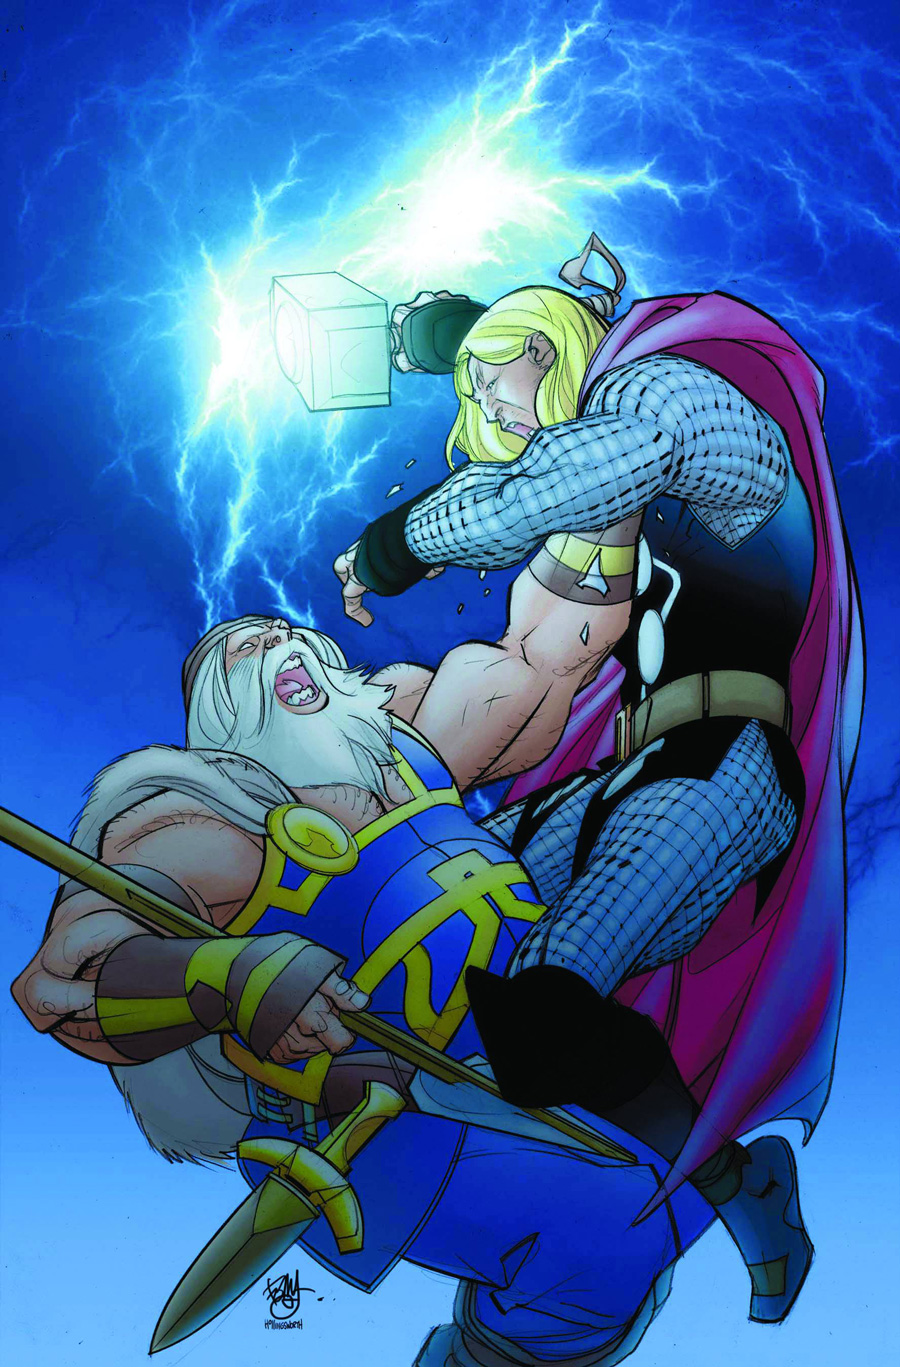 Thor #619